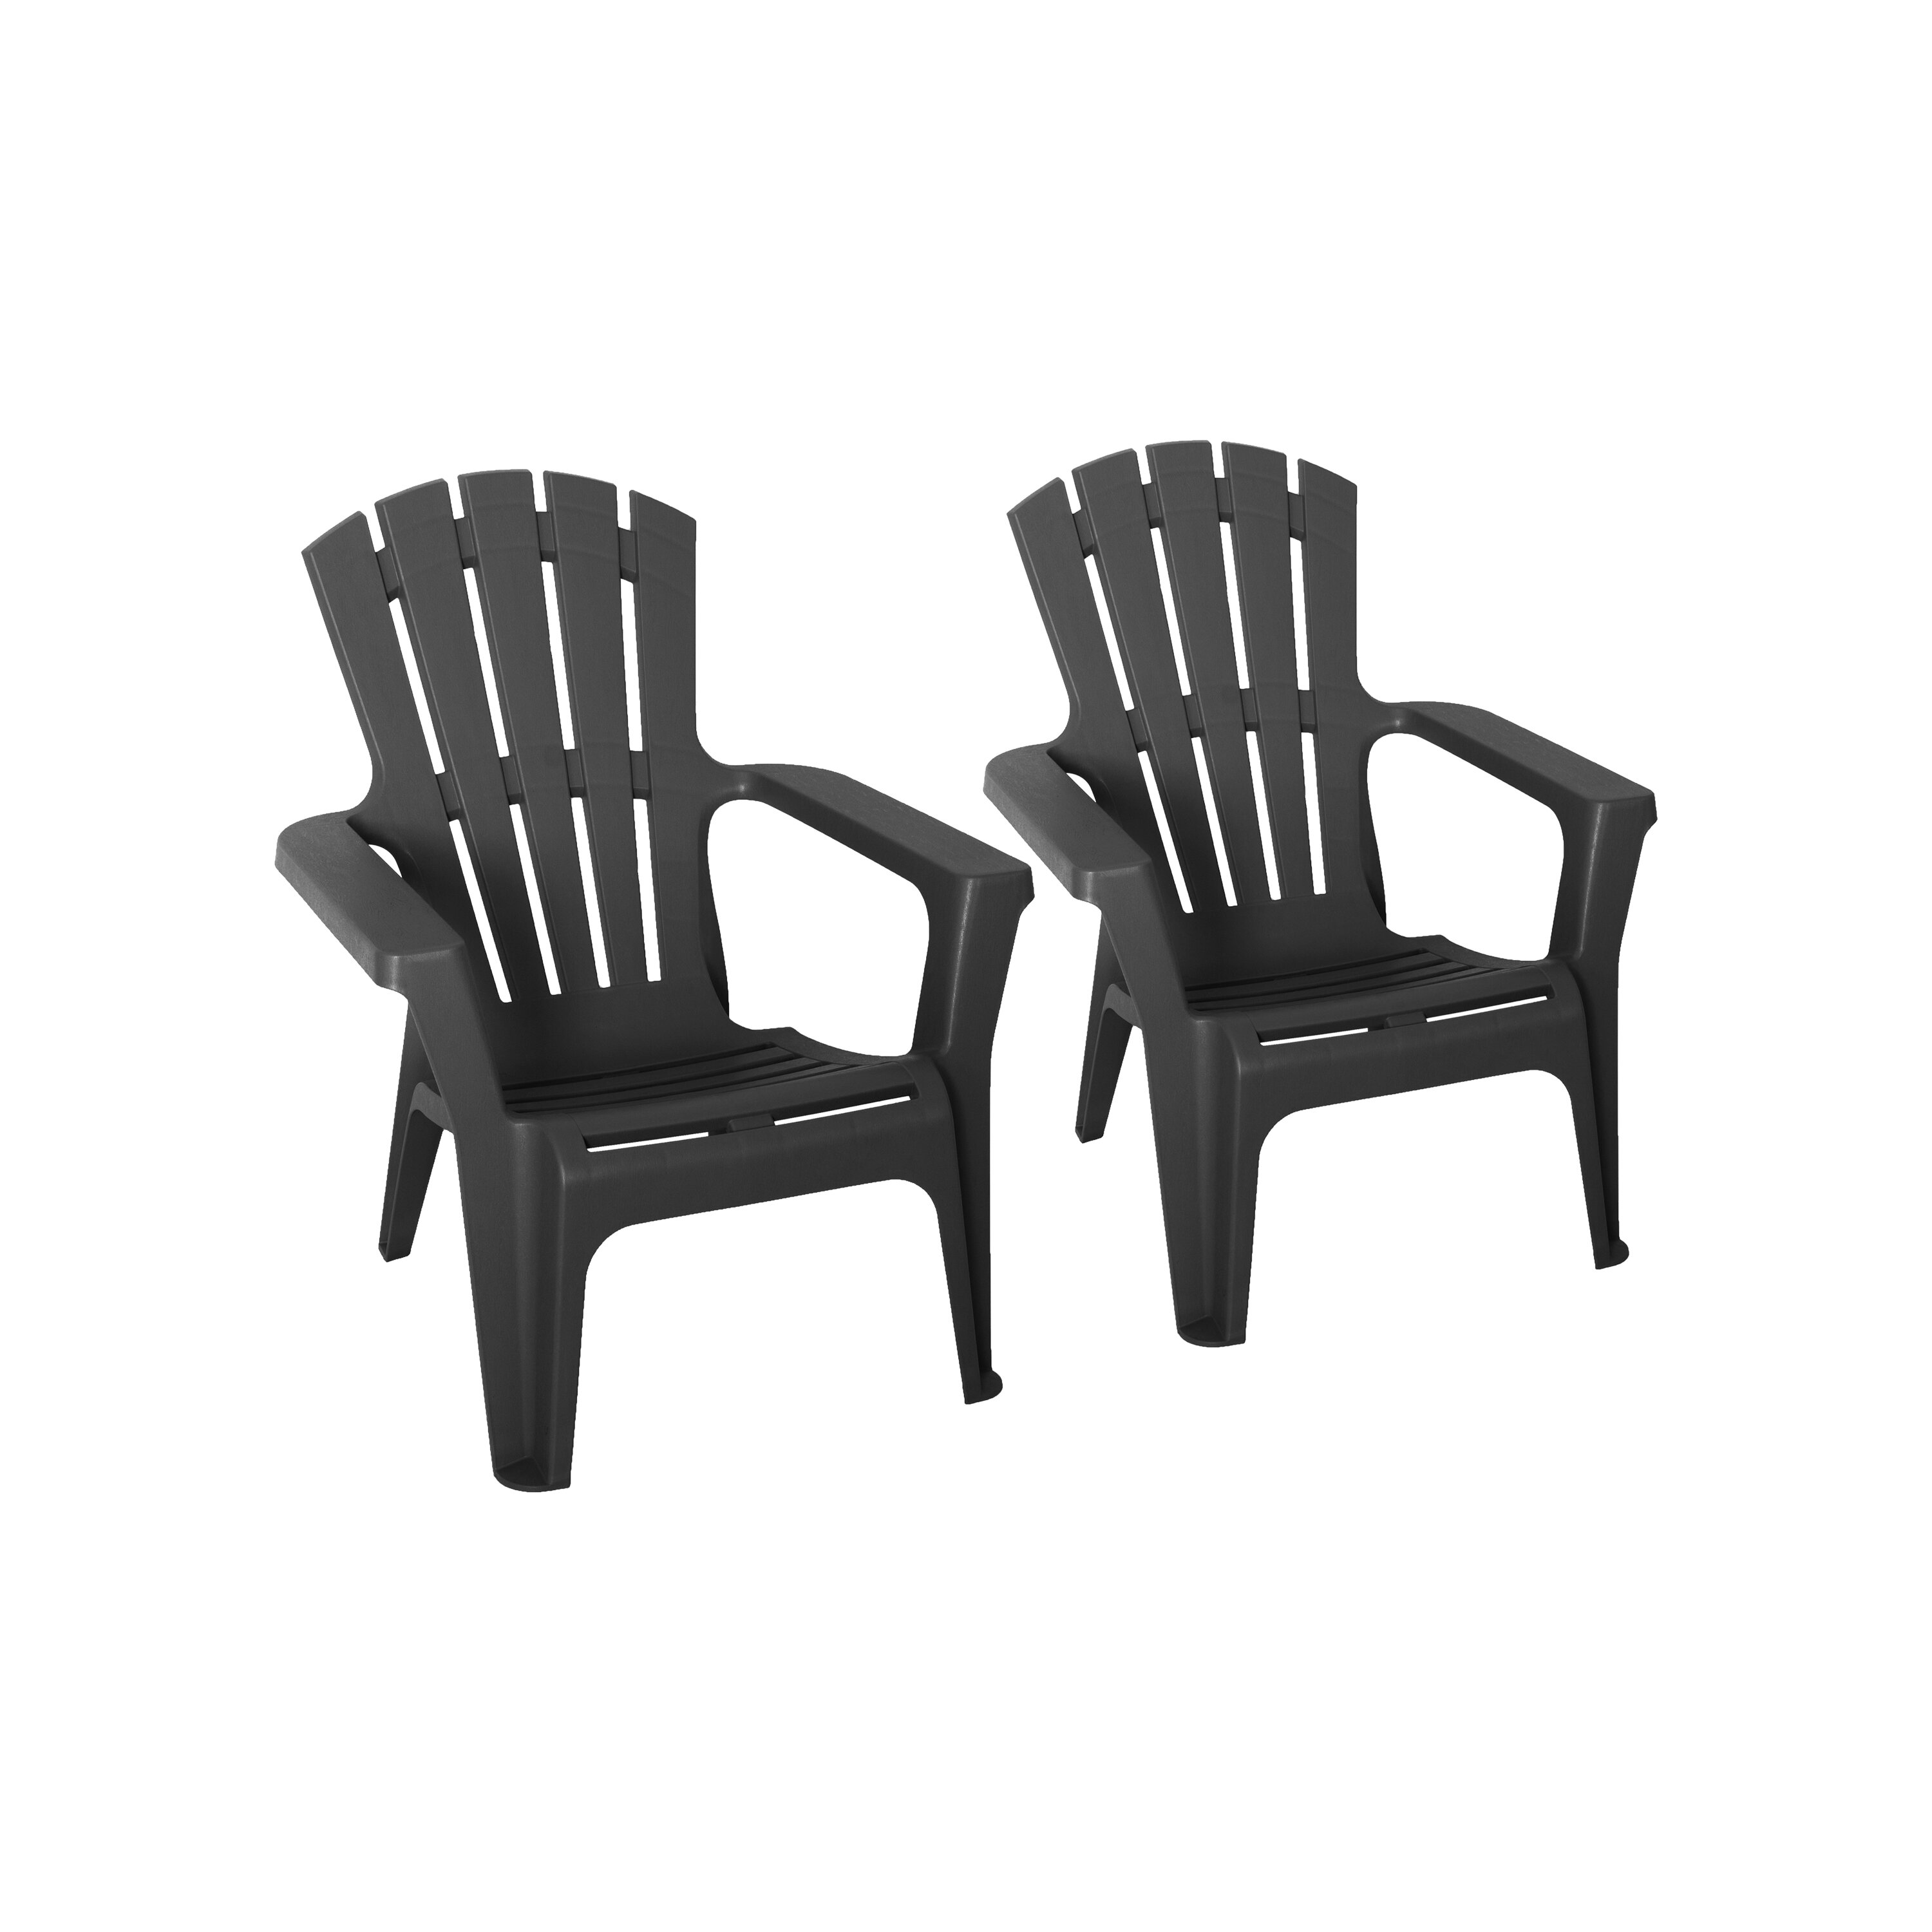 Black Plastic Adirondack Chairs - Polywood Sba15bl South Beach